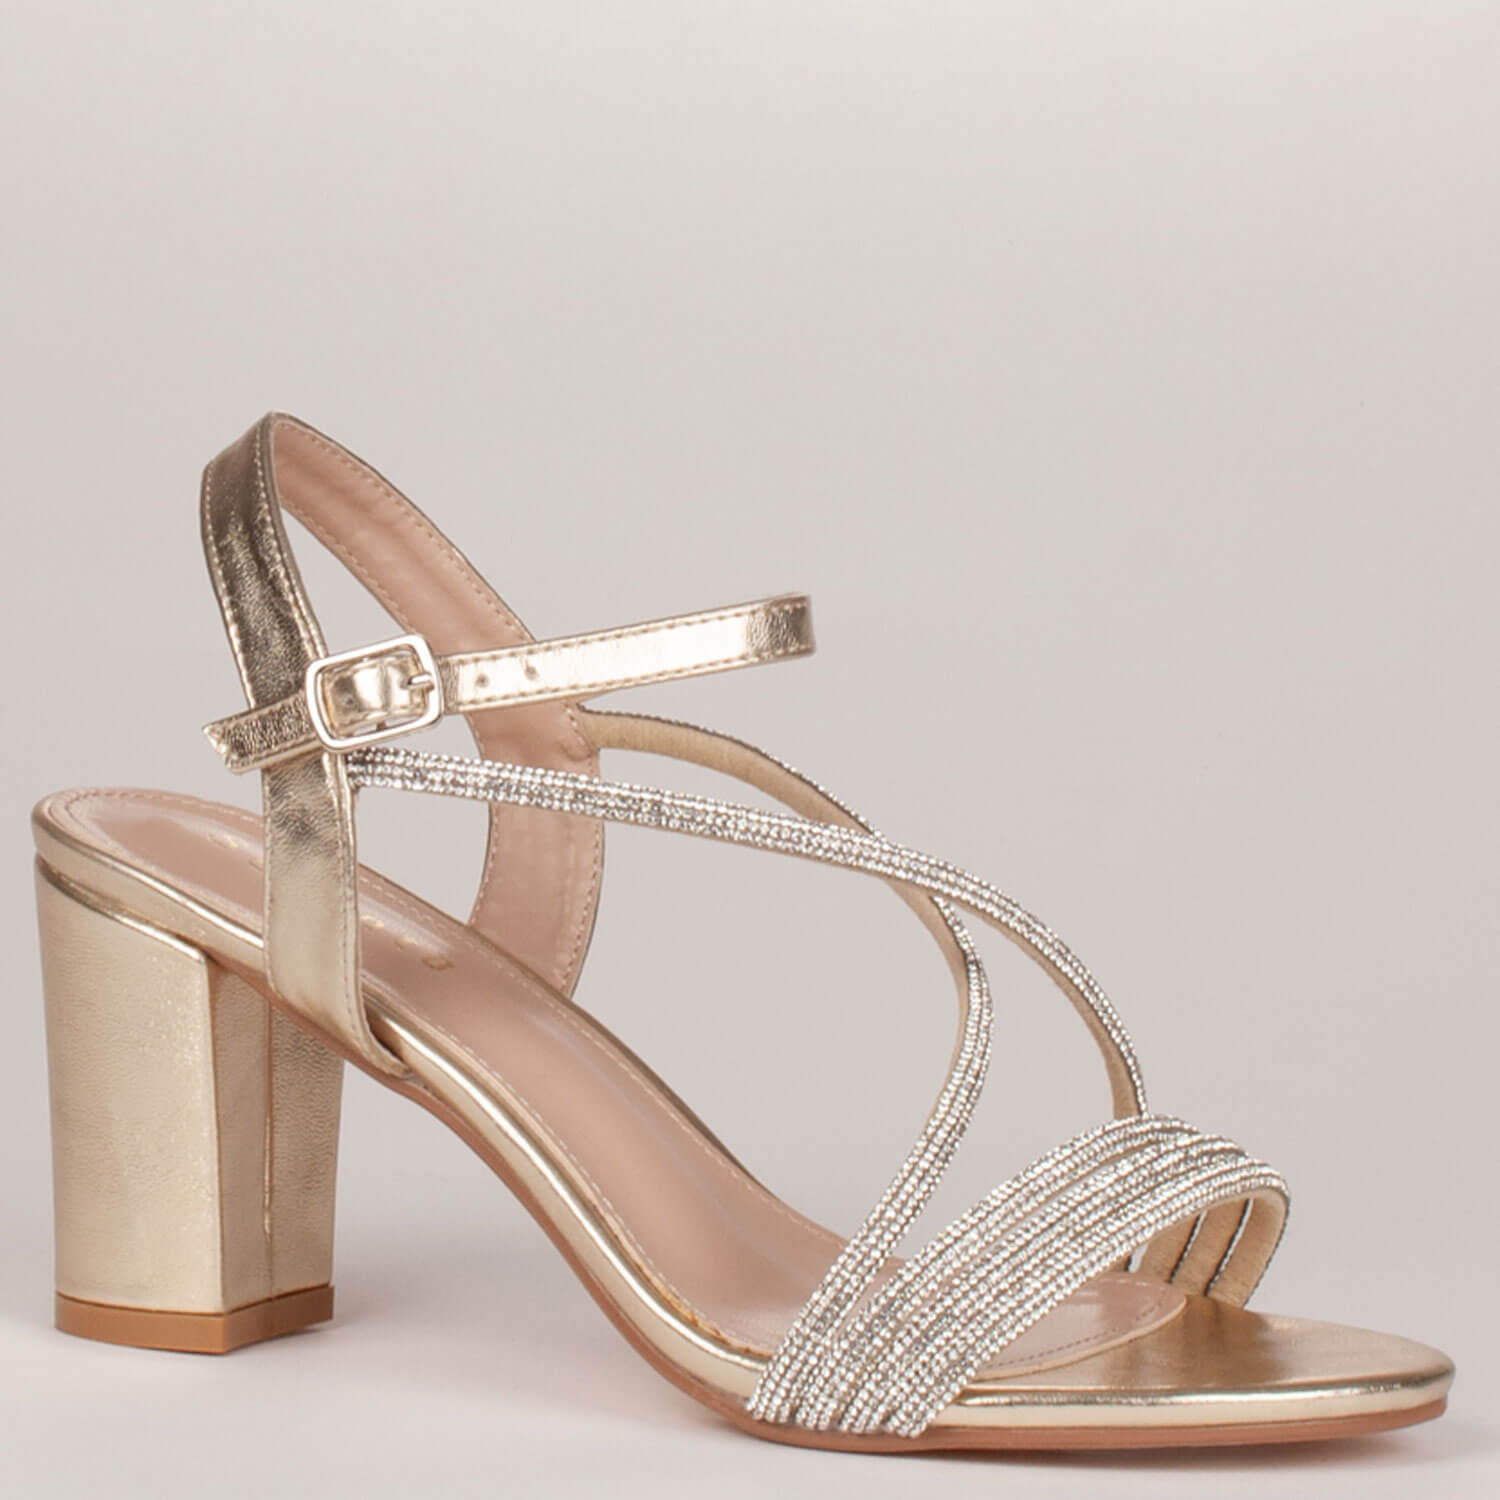 Sorento Cabracastle Heeled Sandal - Gold 1 Shaws Department Stores